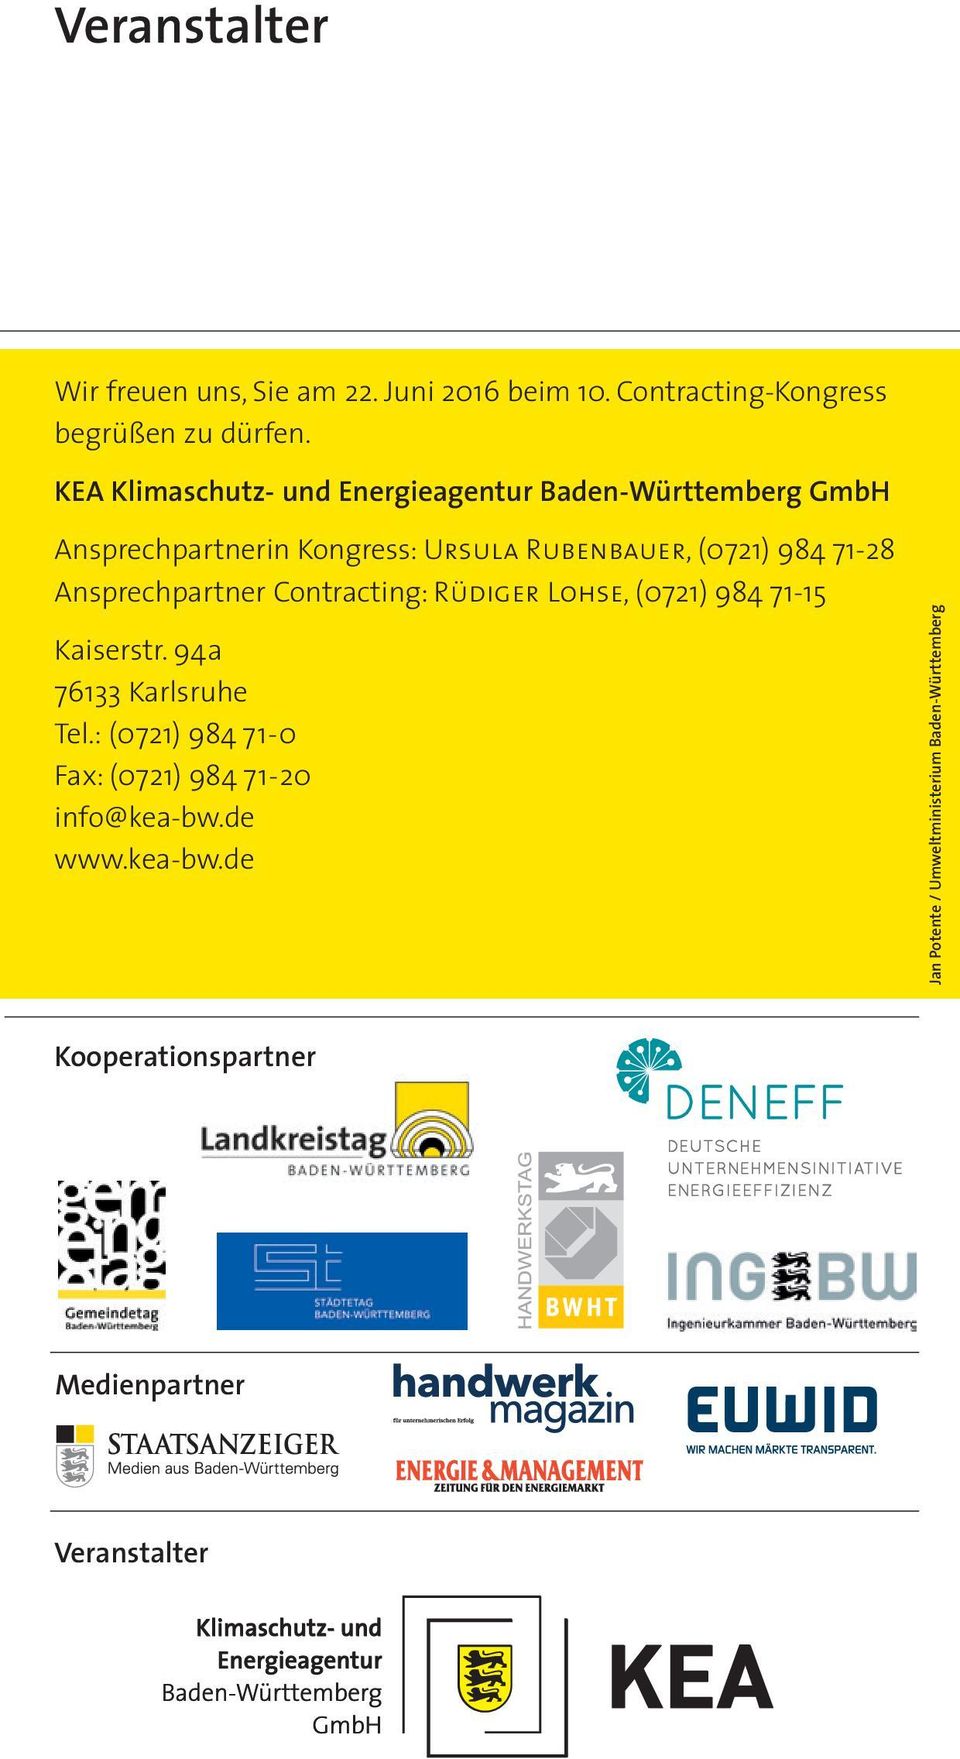 71-28 Ansprechpartner Contracting: Rüdiger Lohse, (0721) 984 71-15 Kaiserstr. 94a 76133 Karlsruhe Tel.